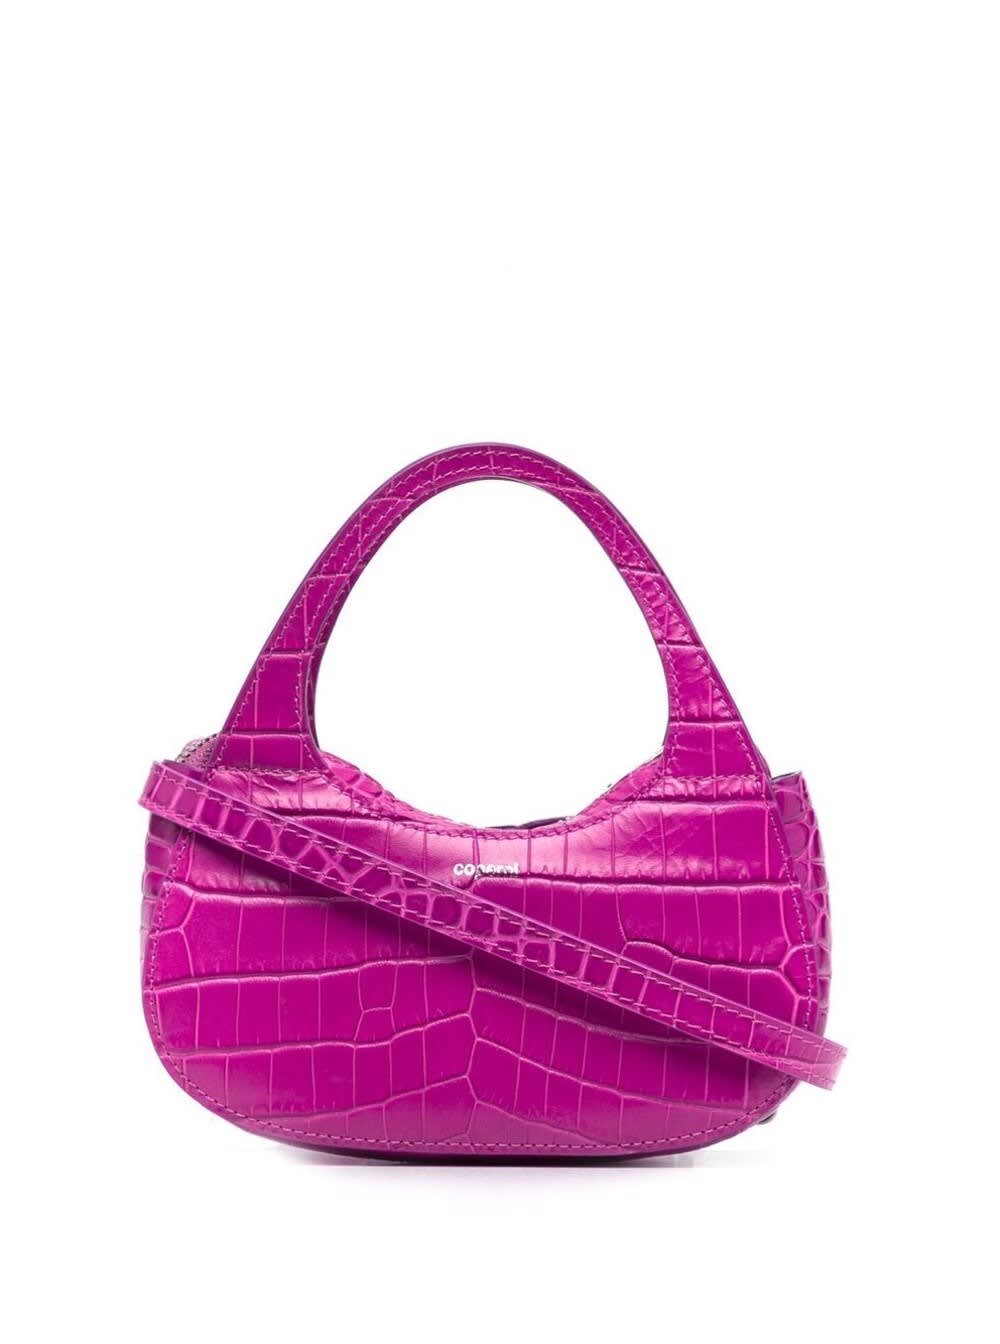 Coperni Swipe Baguette Handbag In Crocodile Print Leather